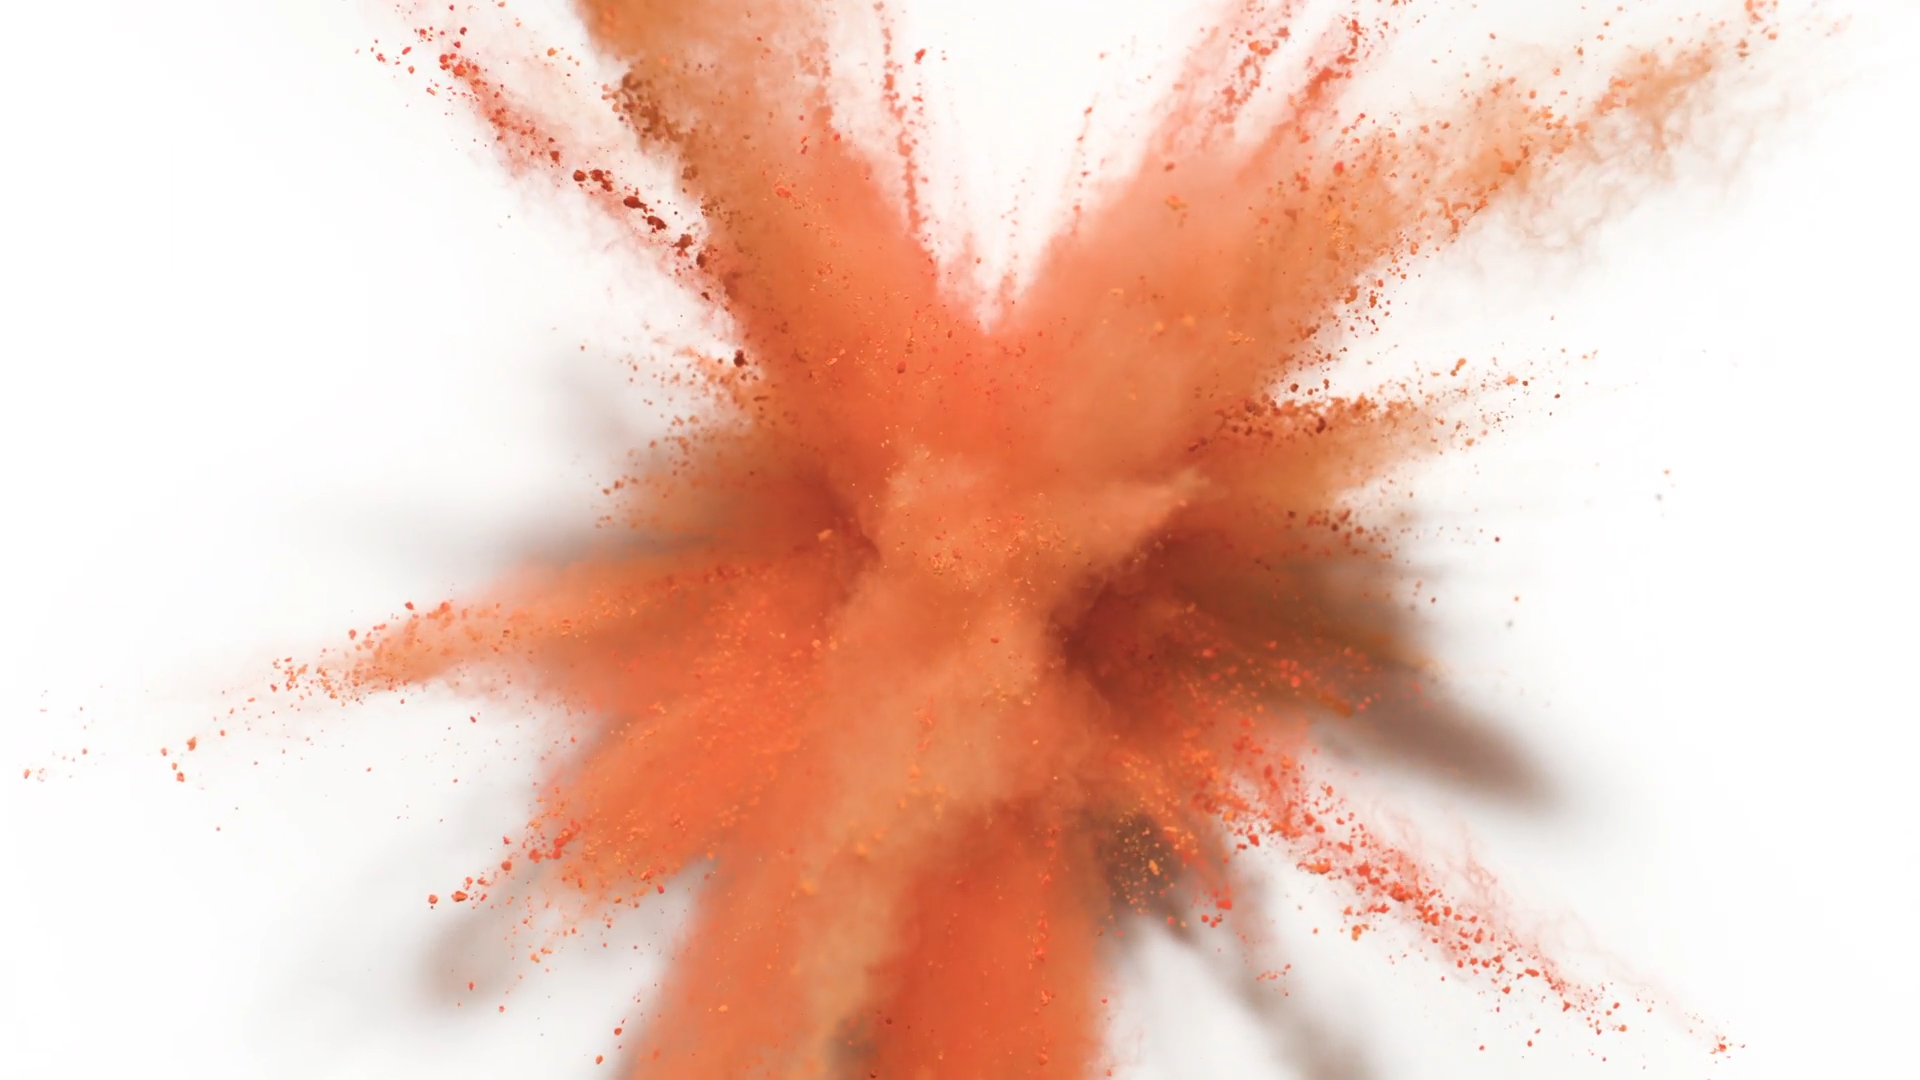 Impact tangerine explosion